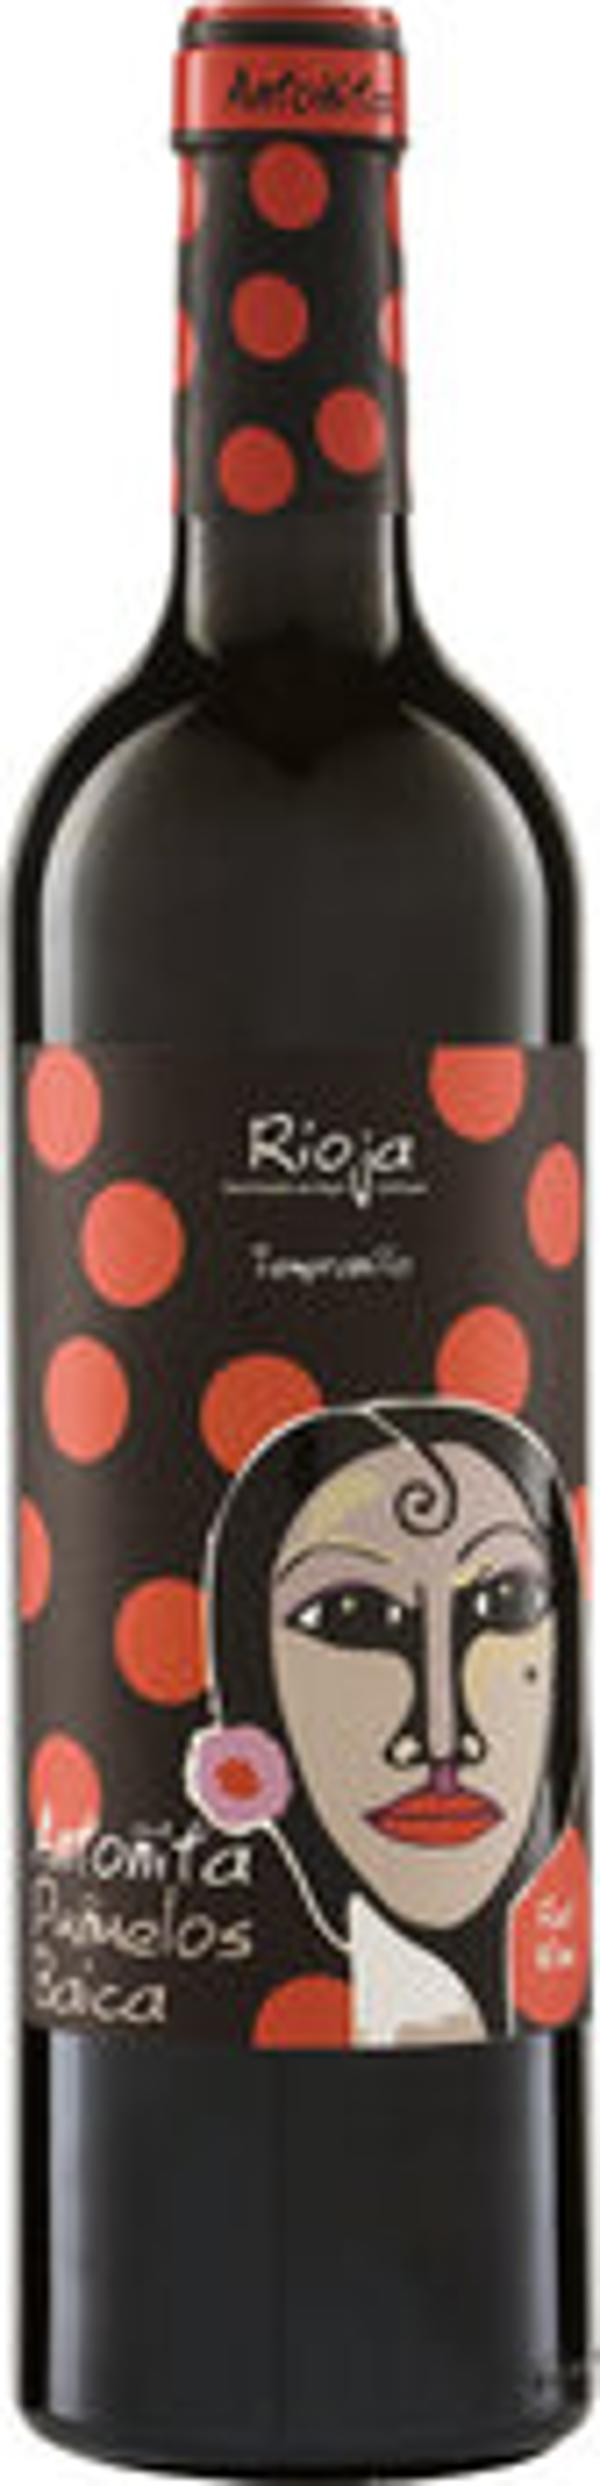 Produktfoto zu Rioja Tempranillo 'Antoñita Puñuelos Tinto D.O.Ca.,Rotwein trocken 0,75l